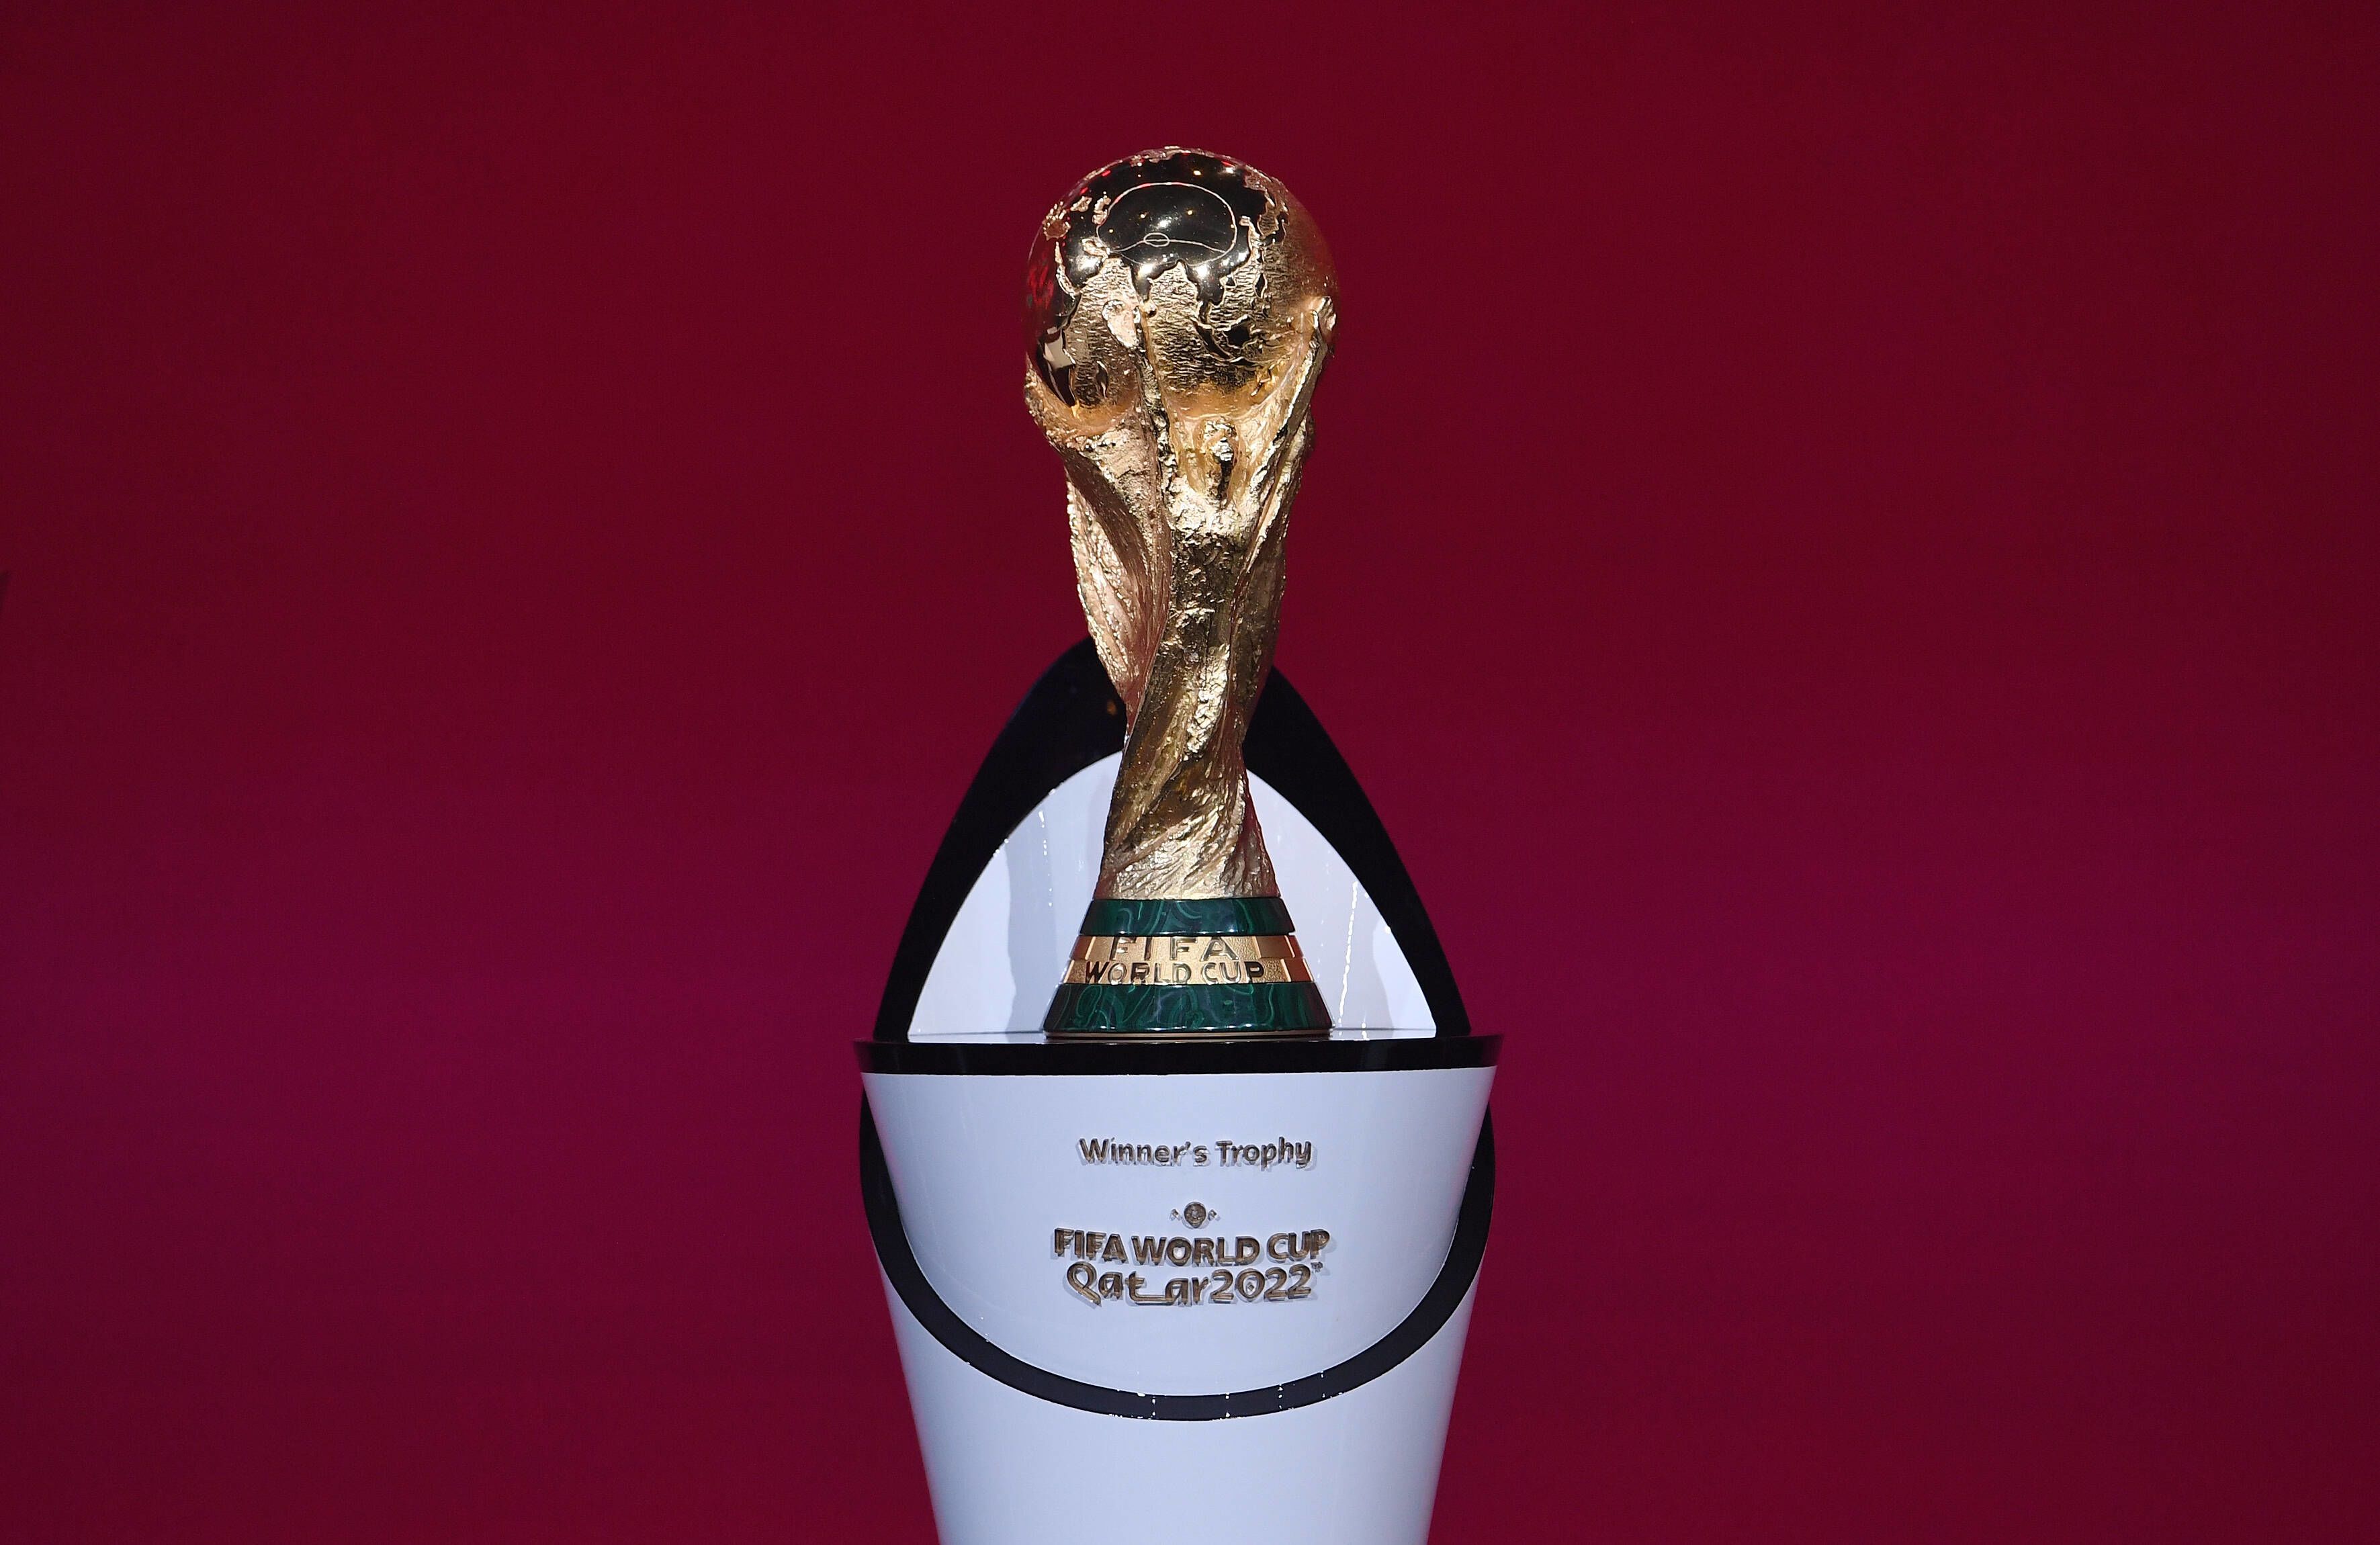 https://media.cnn.com/api/v1/images/stellar/prod/220330050638-fifa-world-cup-trophy-qatar-file-12062020.jpg?c=original